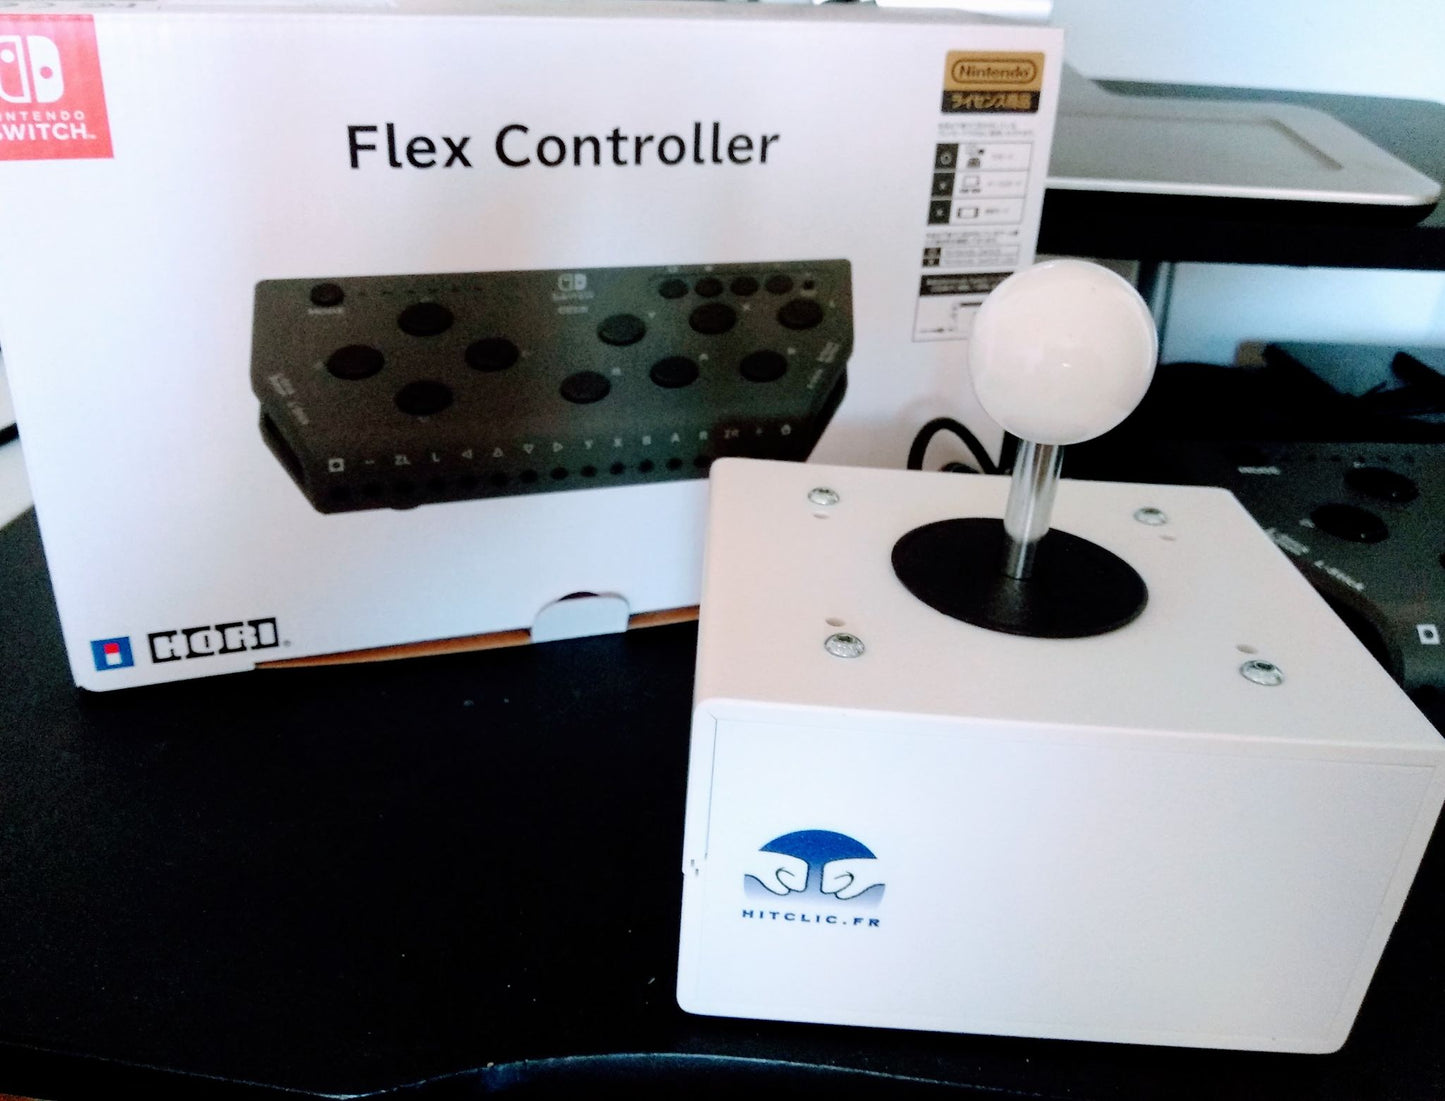 The Flex Controller + USB analog joystick pack